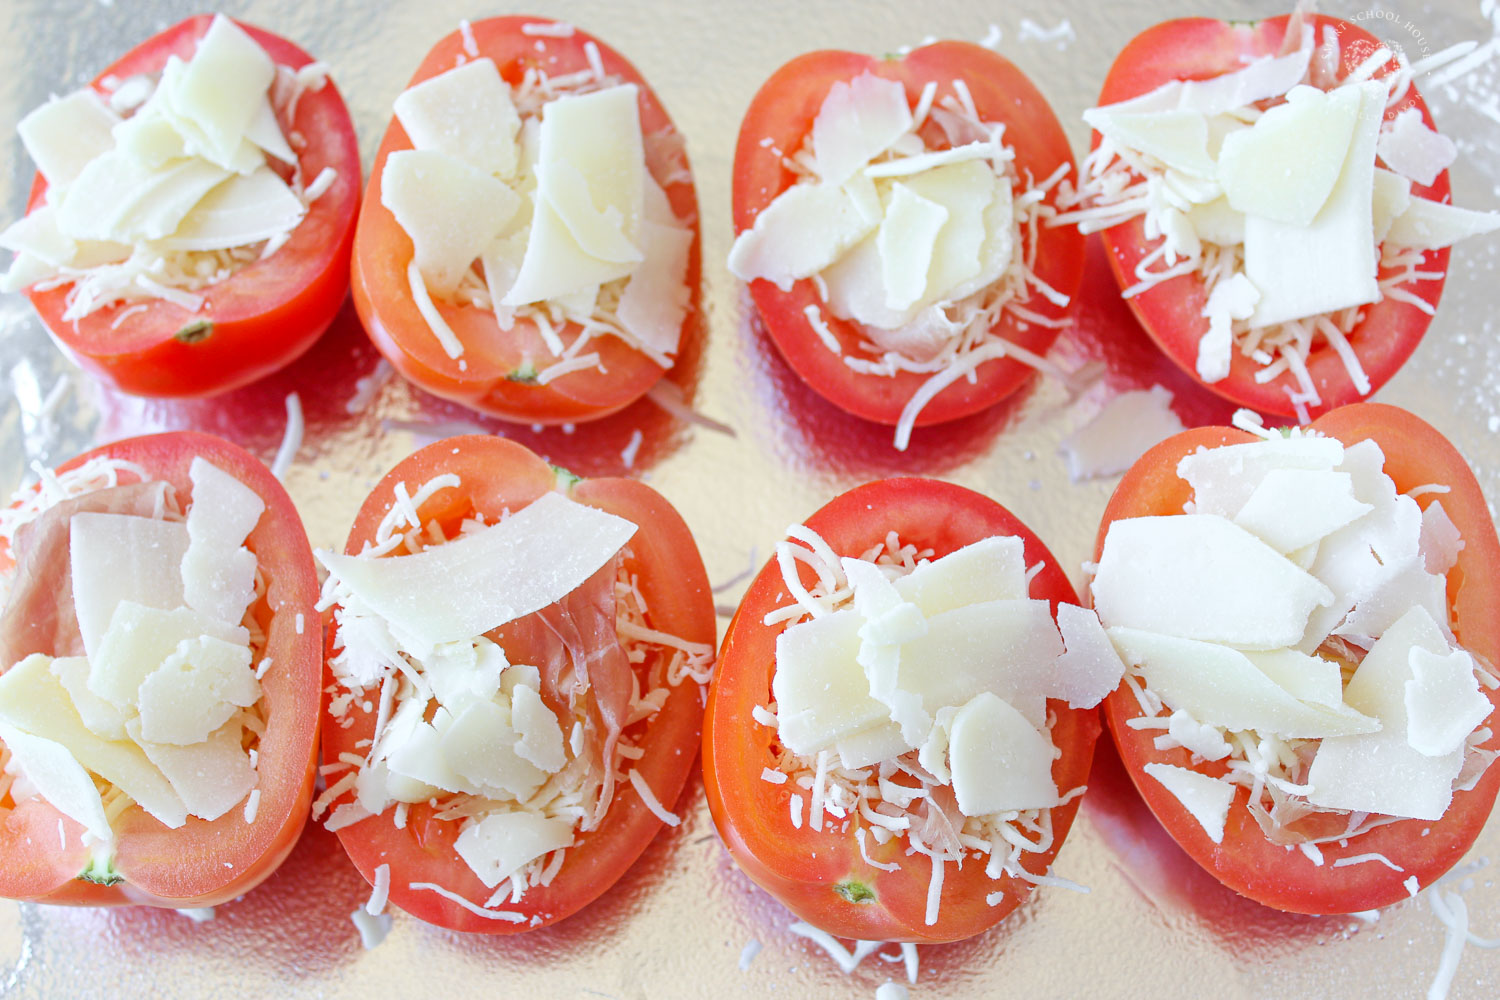 Tomatoes with mozzarella, shredded parmesan, and prosciutto